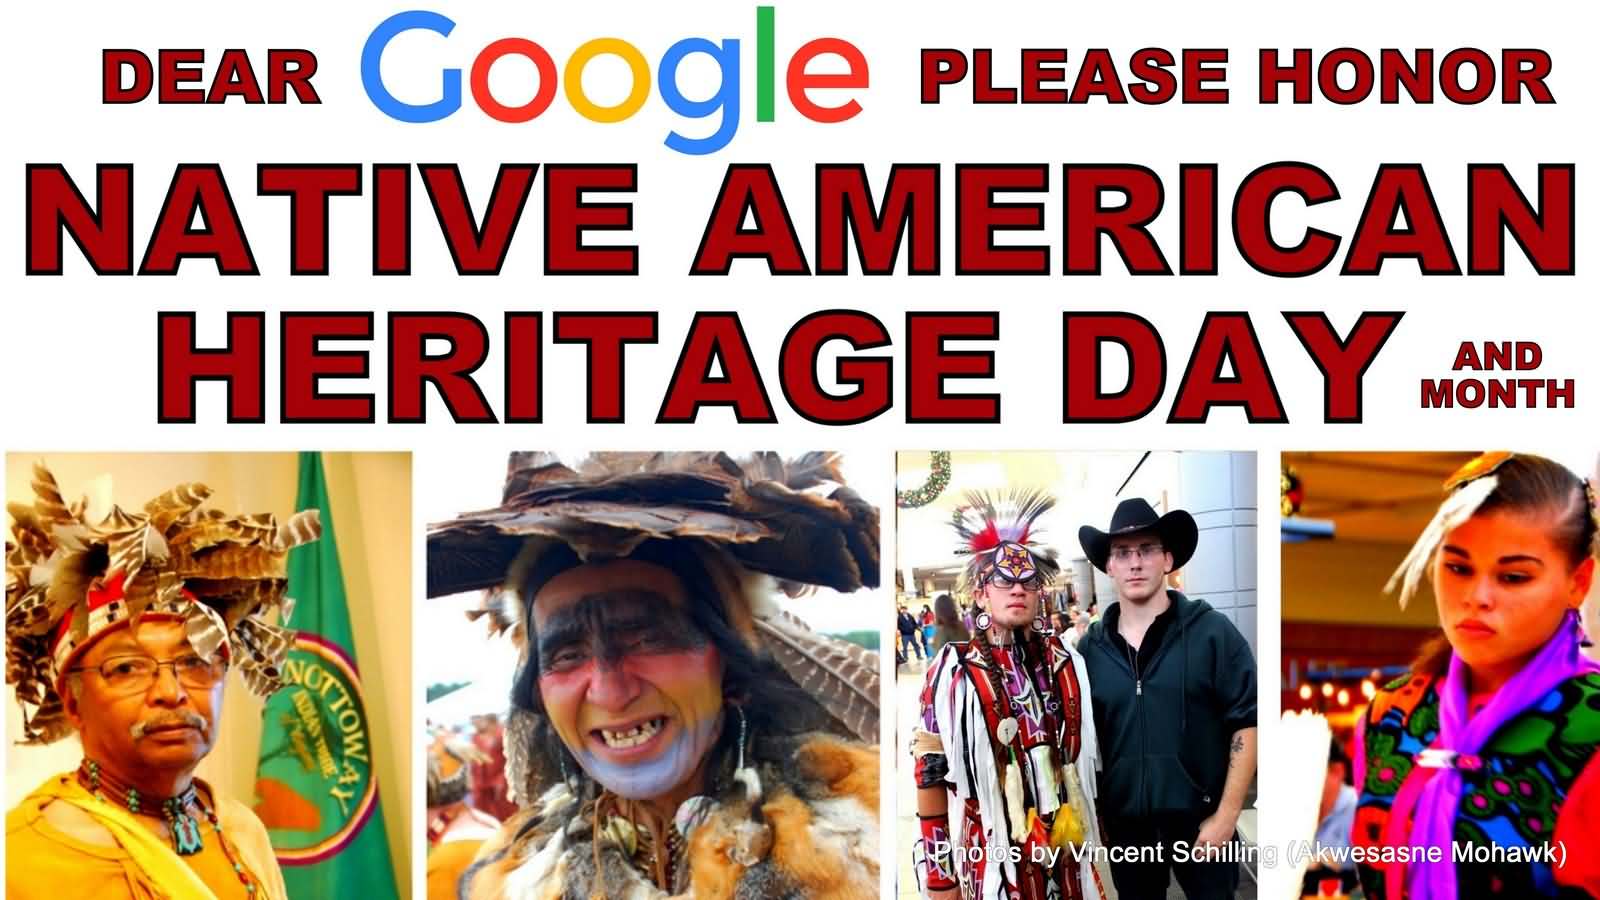 Dear Google Please Honor Native American Heritage Day